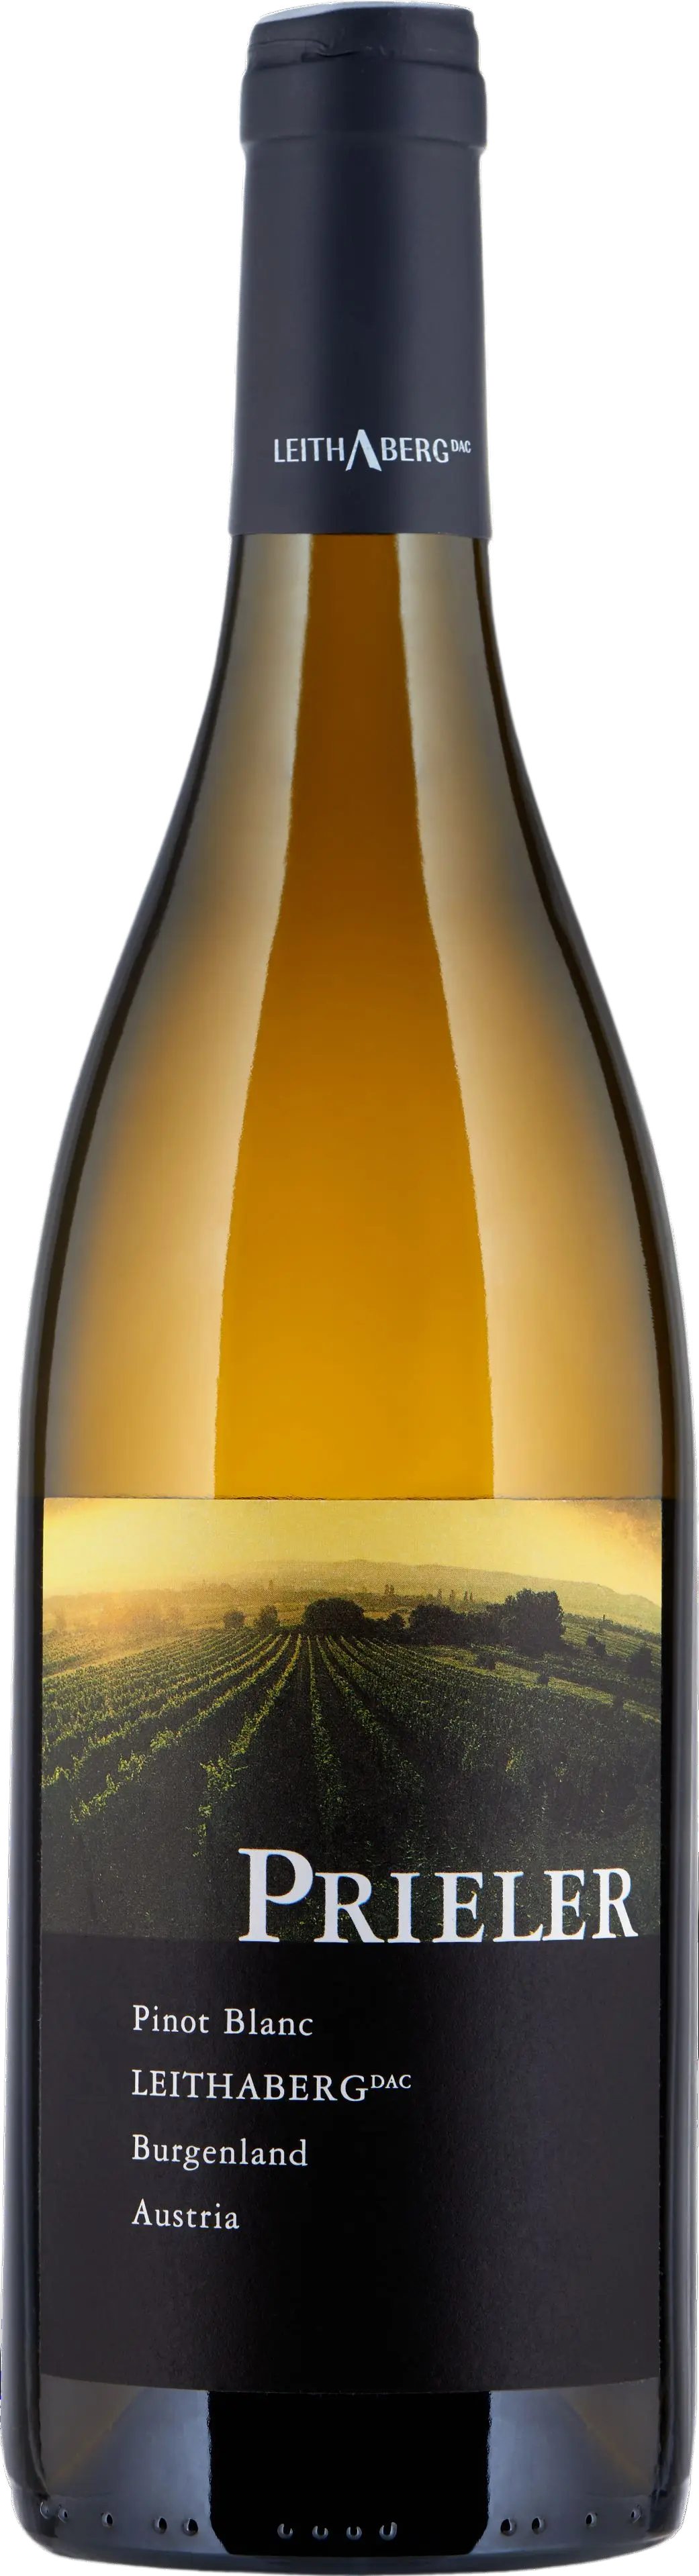 Prieler Leithaberg Pinot Blanc, Prieler 2019